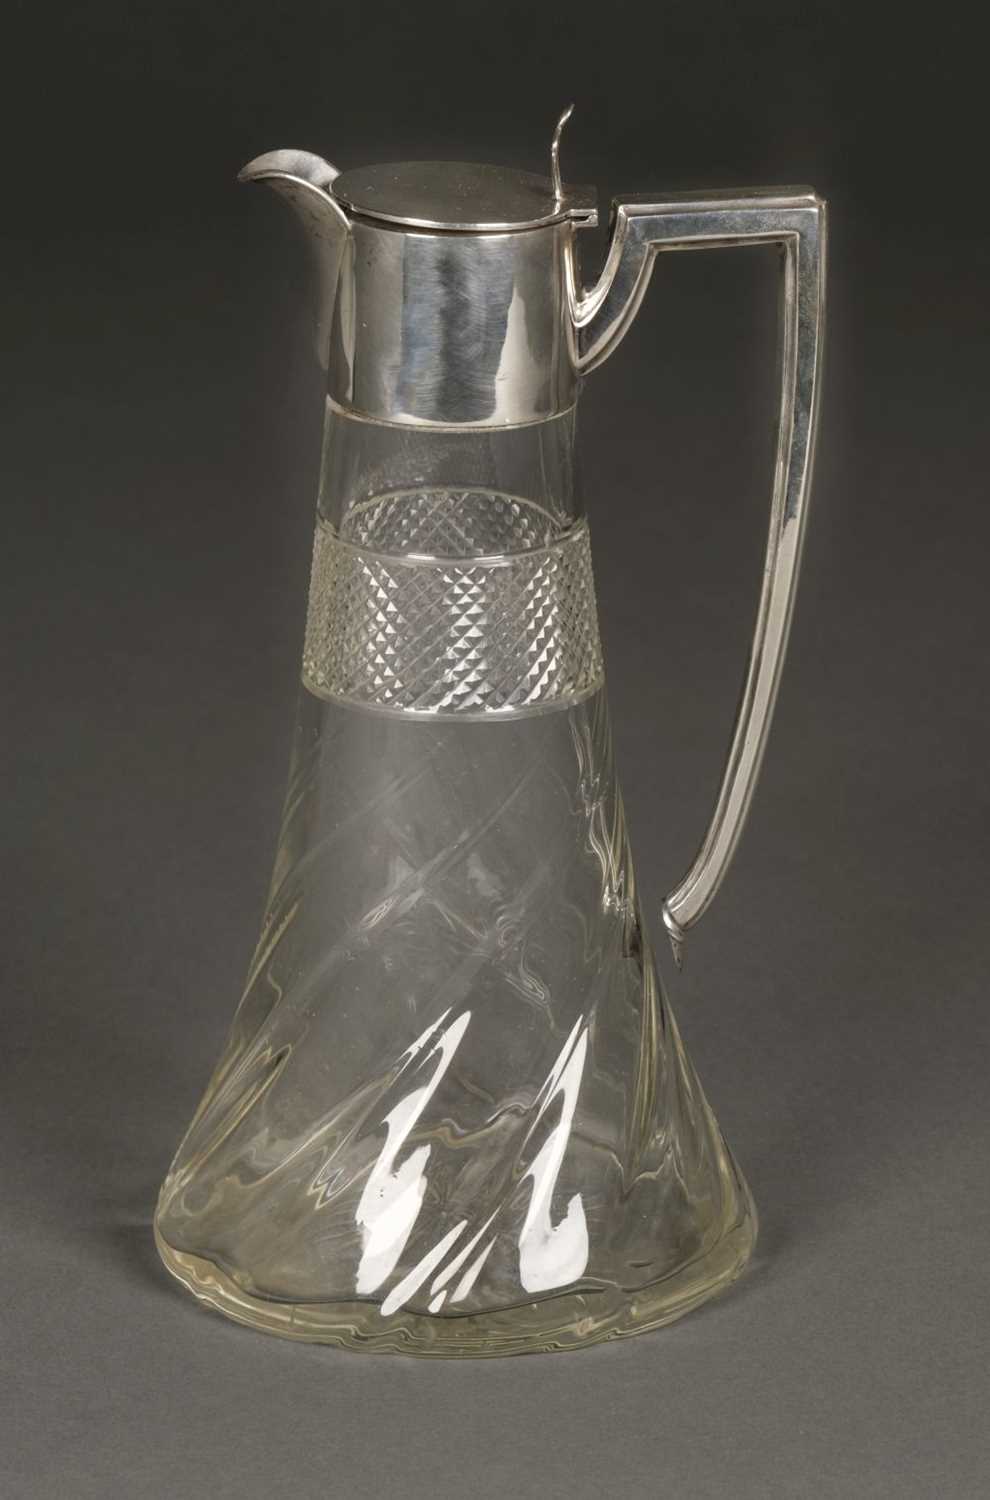 Lot 11 - Claret Jug. Silver top claret jug by Walker & Hall, Sheffield, 1909